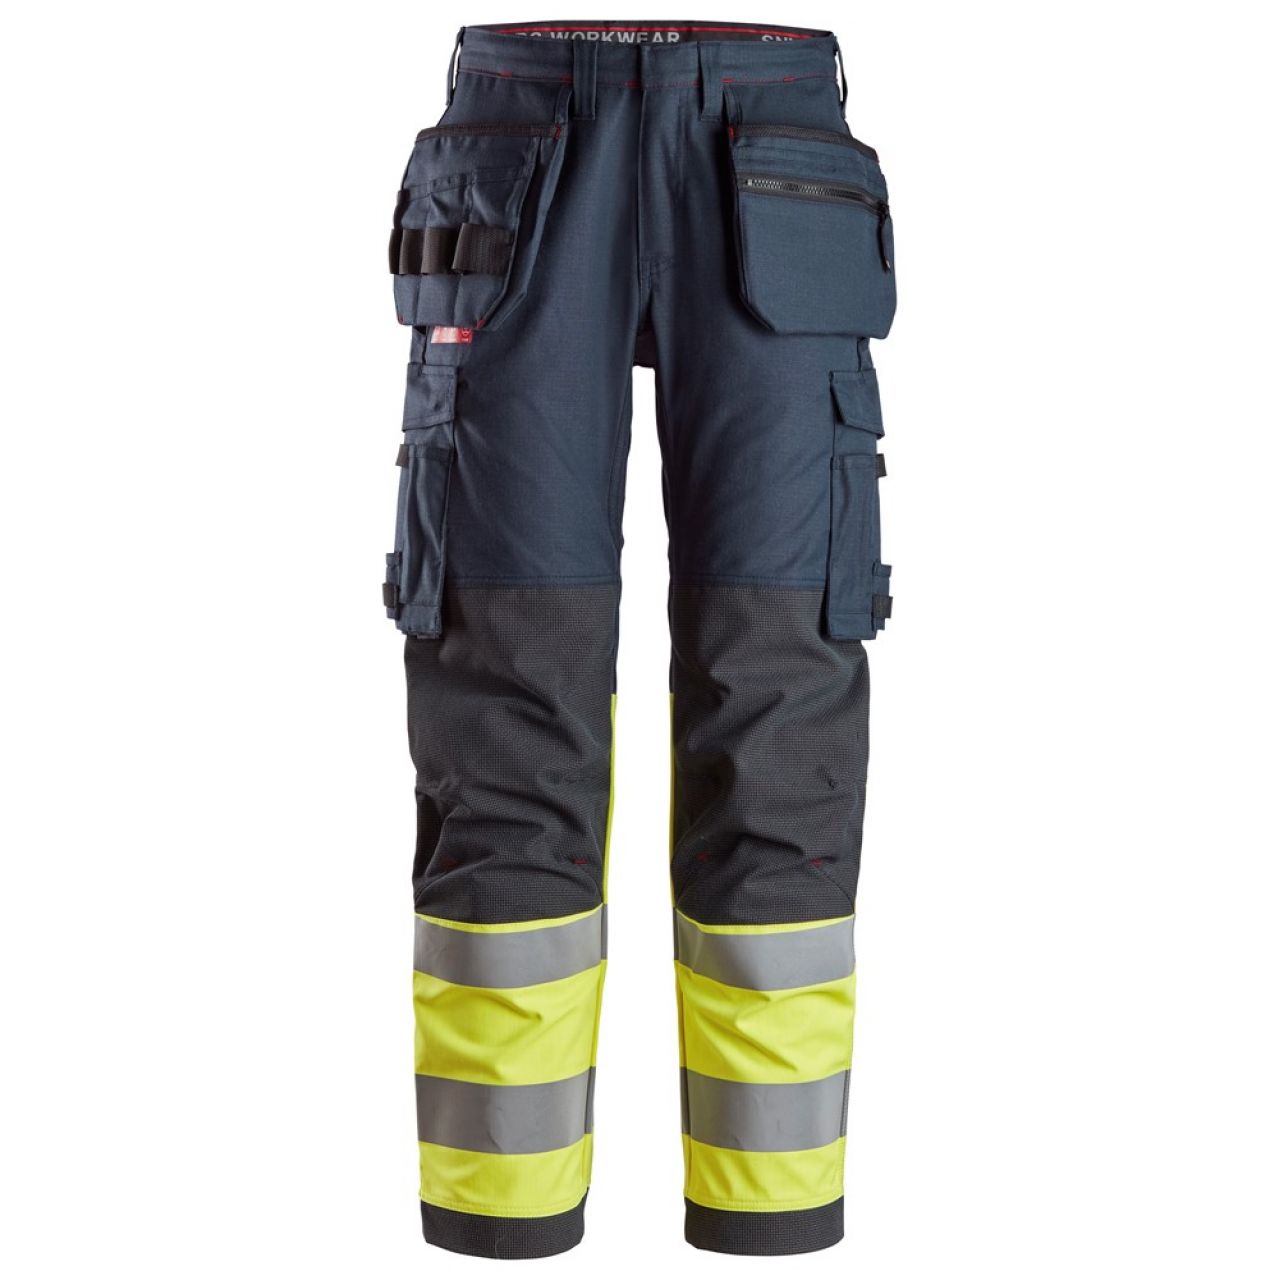 6263 Pantalones largos de trabajo de alta visibilidad clase 1 con bolsillos flotantes ProtecWork azul marino-amarillo talla 60